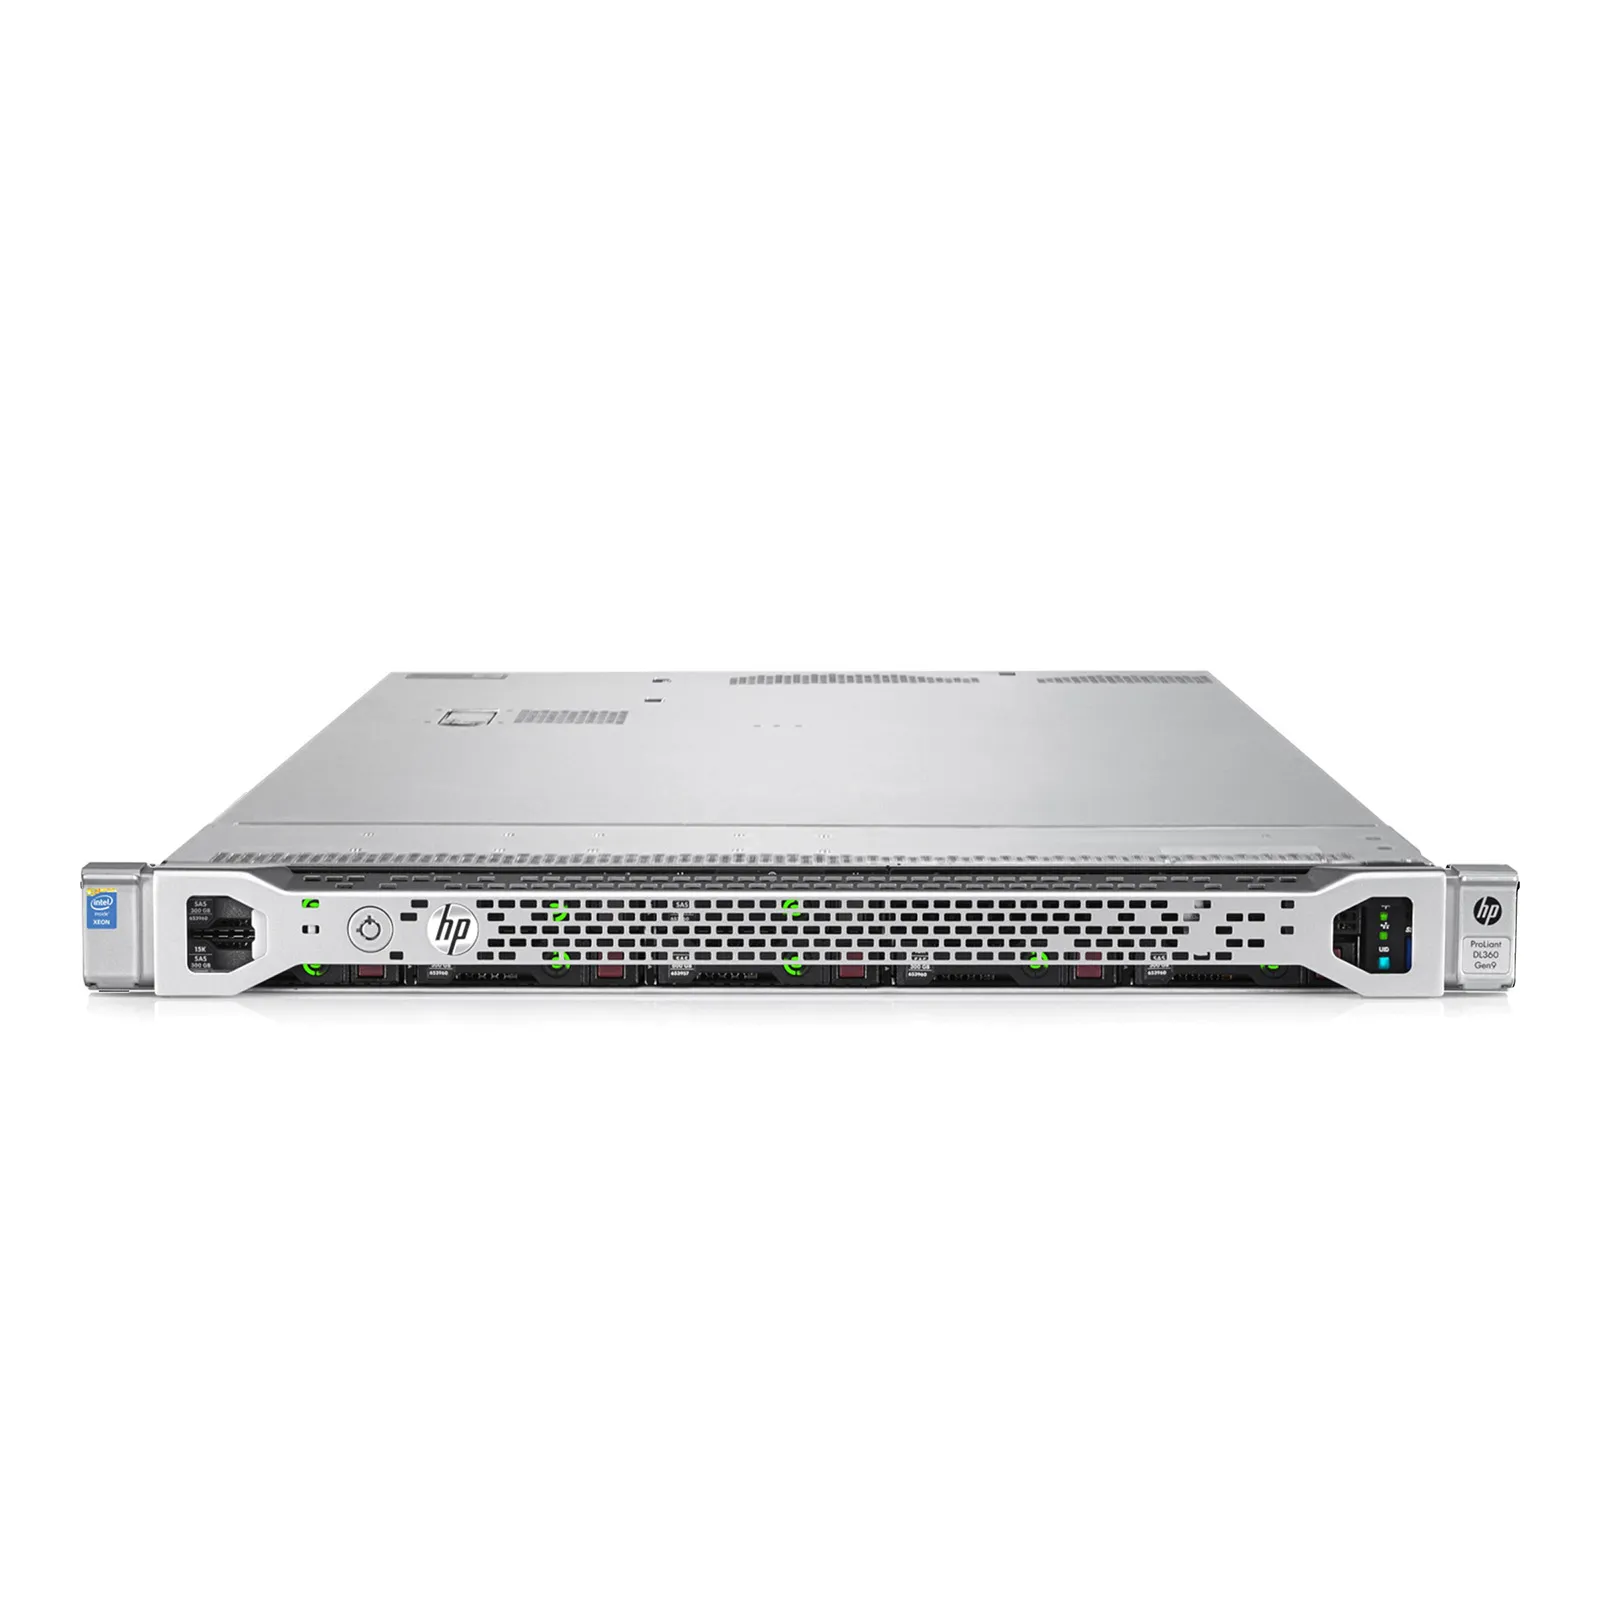 HPE ProLiant DL360 Gen9 1U Rack Server